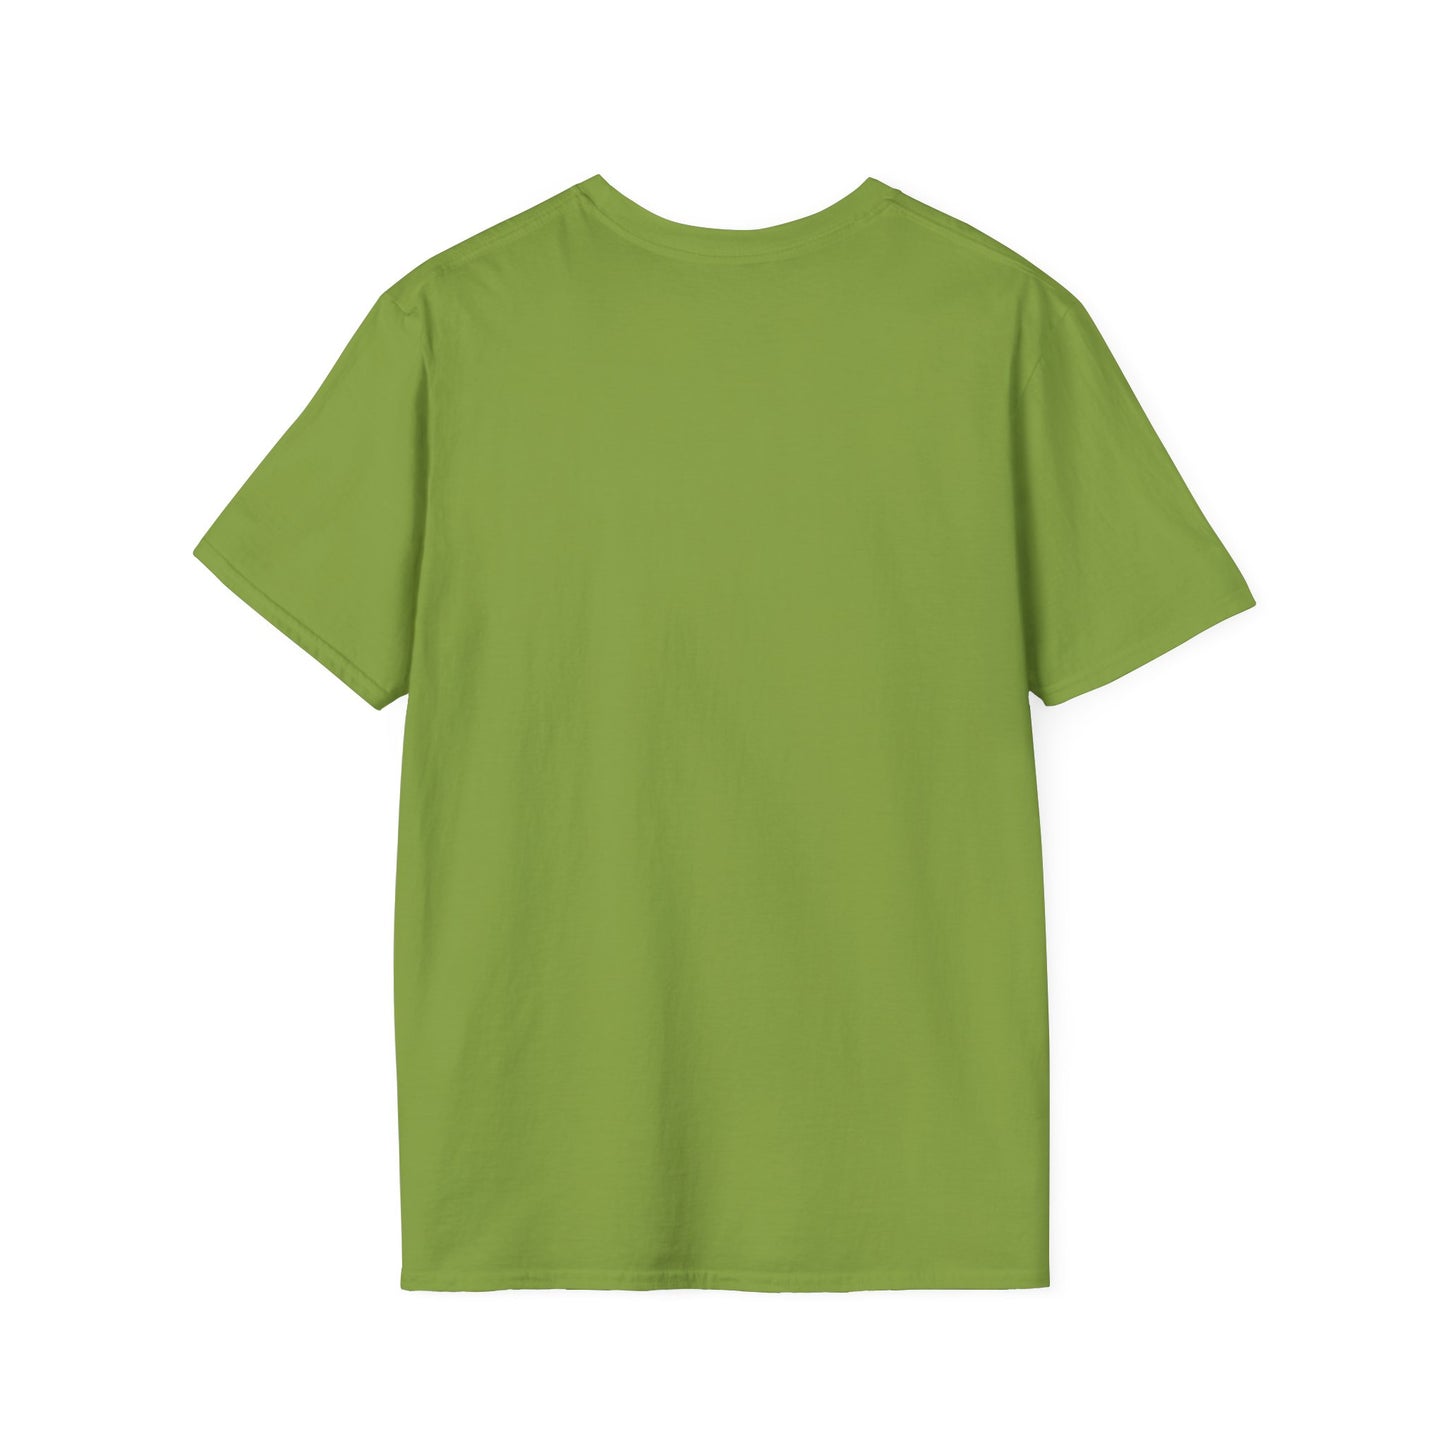 SCHNAUZER NATION Unisex Softstyle T-Shirt